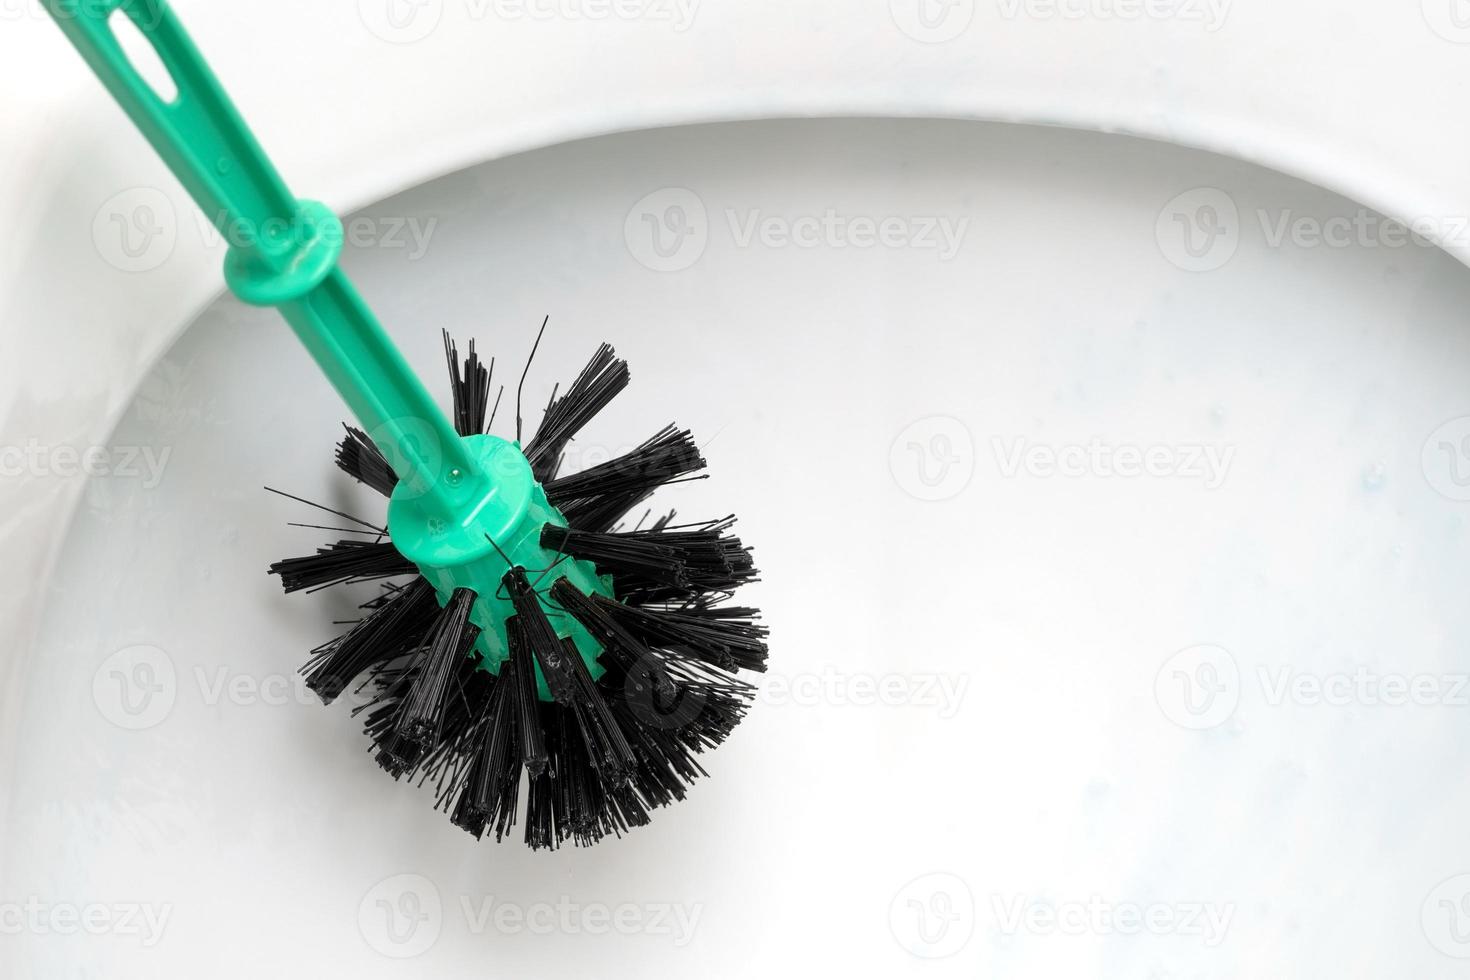 Limpiar la taza del inodoro con un cepillo de inodoro de cerca foto